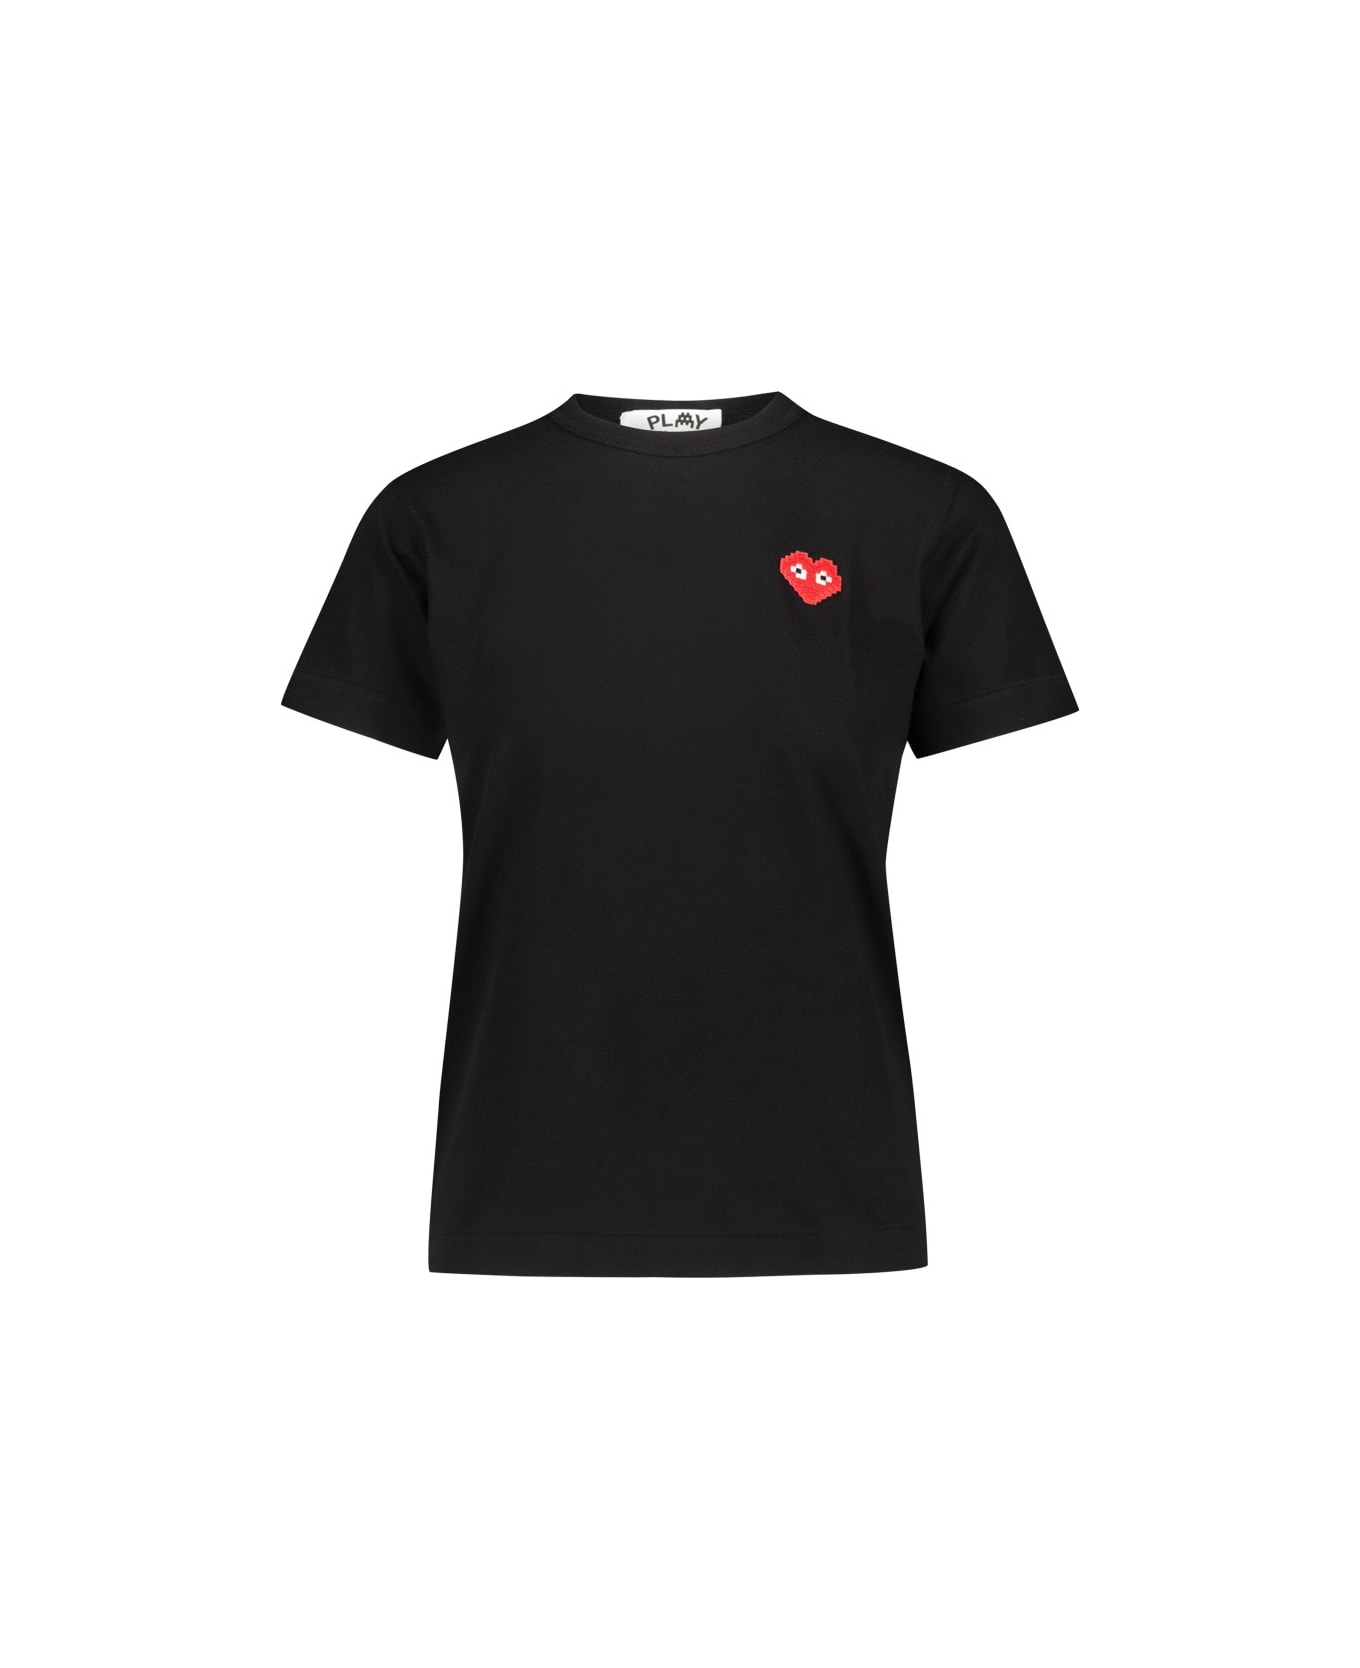 Comme des Garçons Play T-shirt With Red Pixelated Heart - Blk